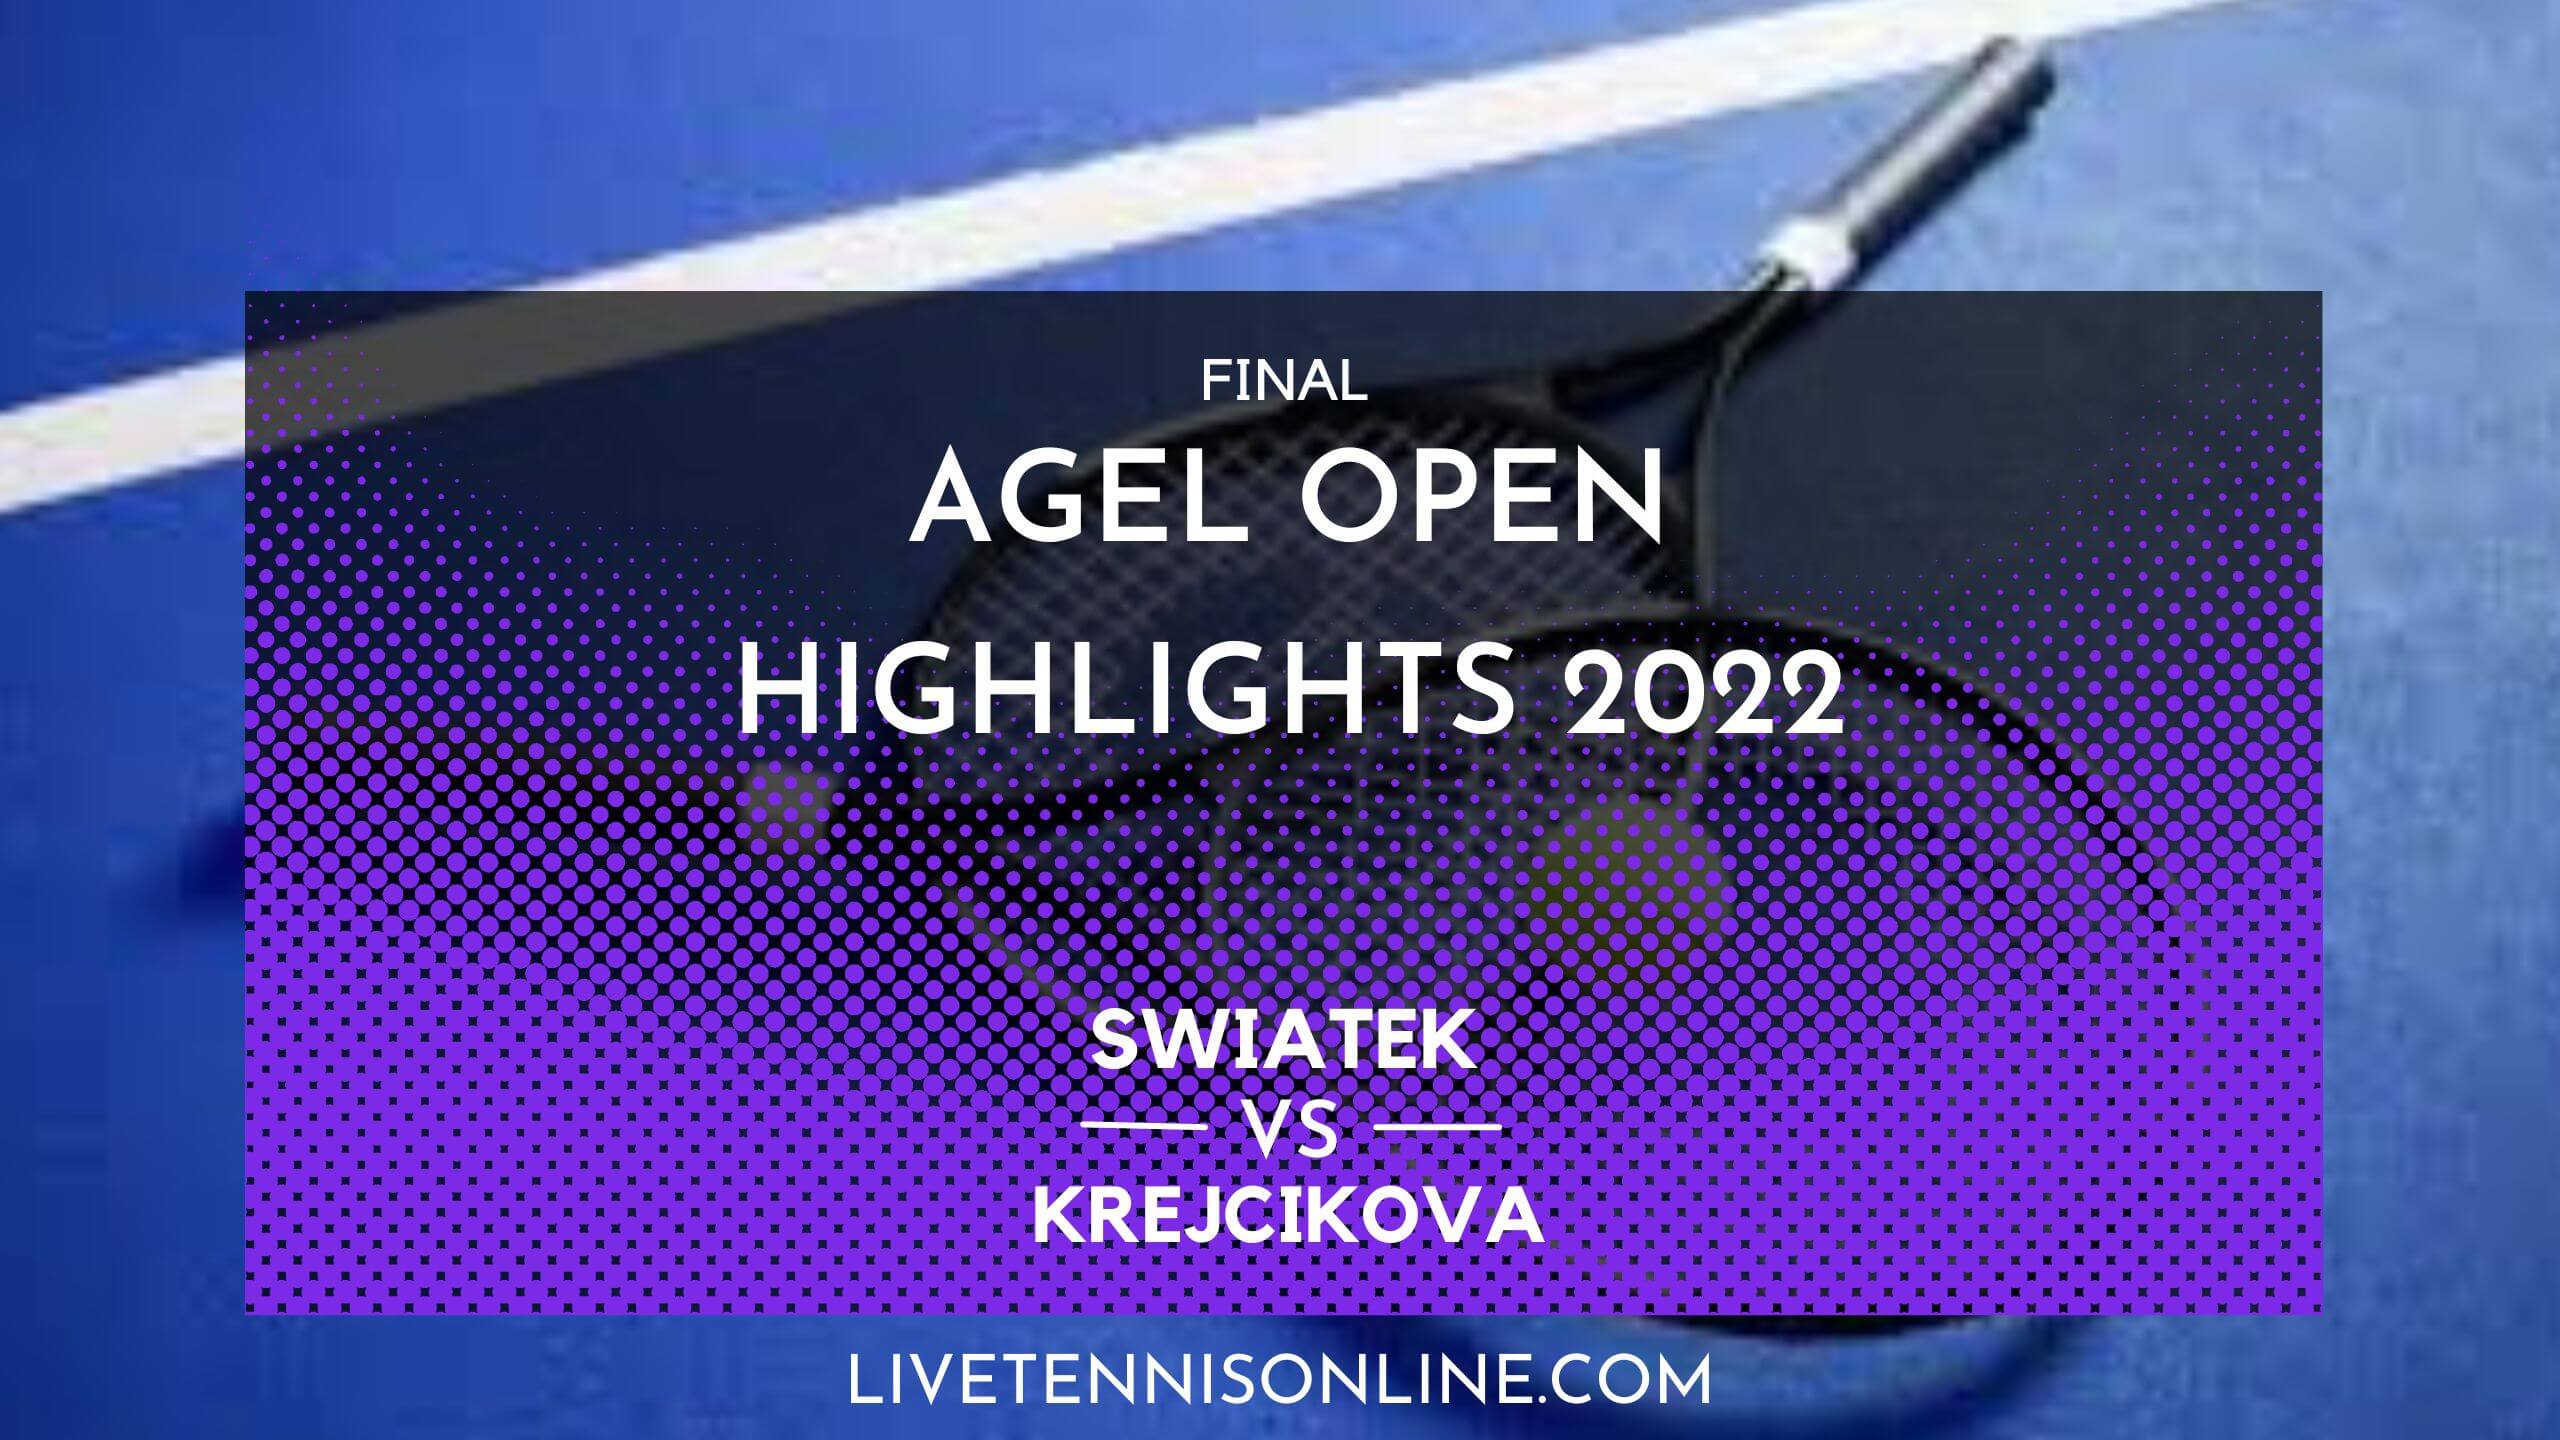 Swiatek Vs Krejcikova Final Highlights 2022 Agel Open